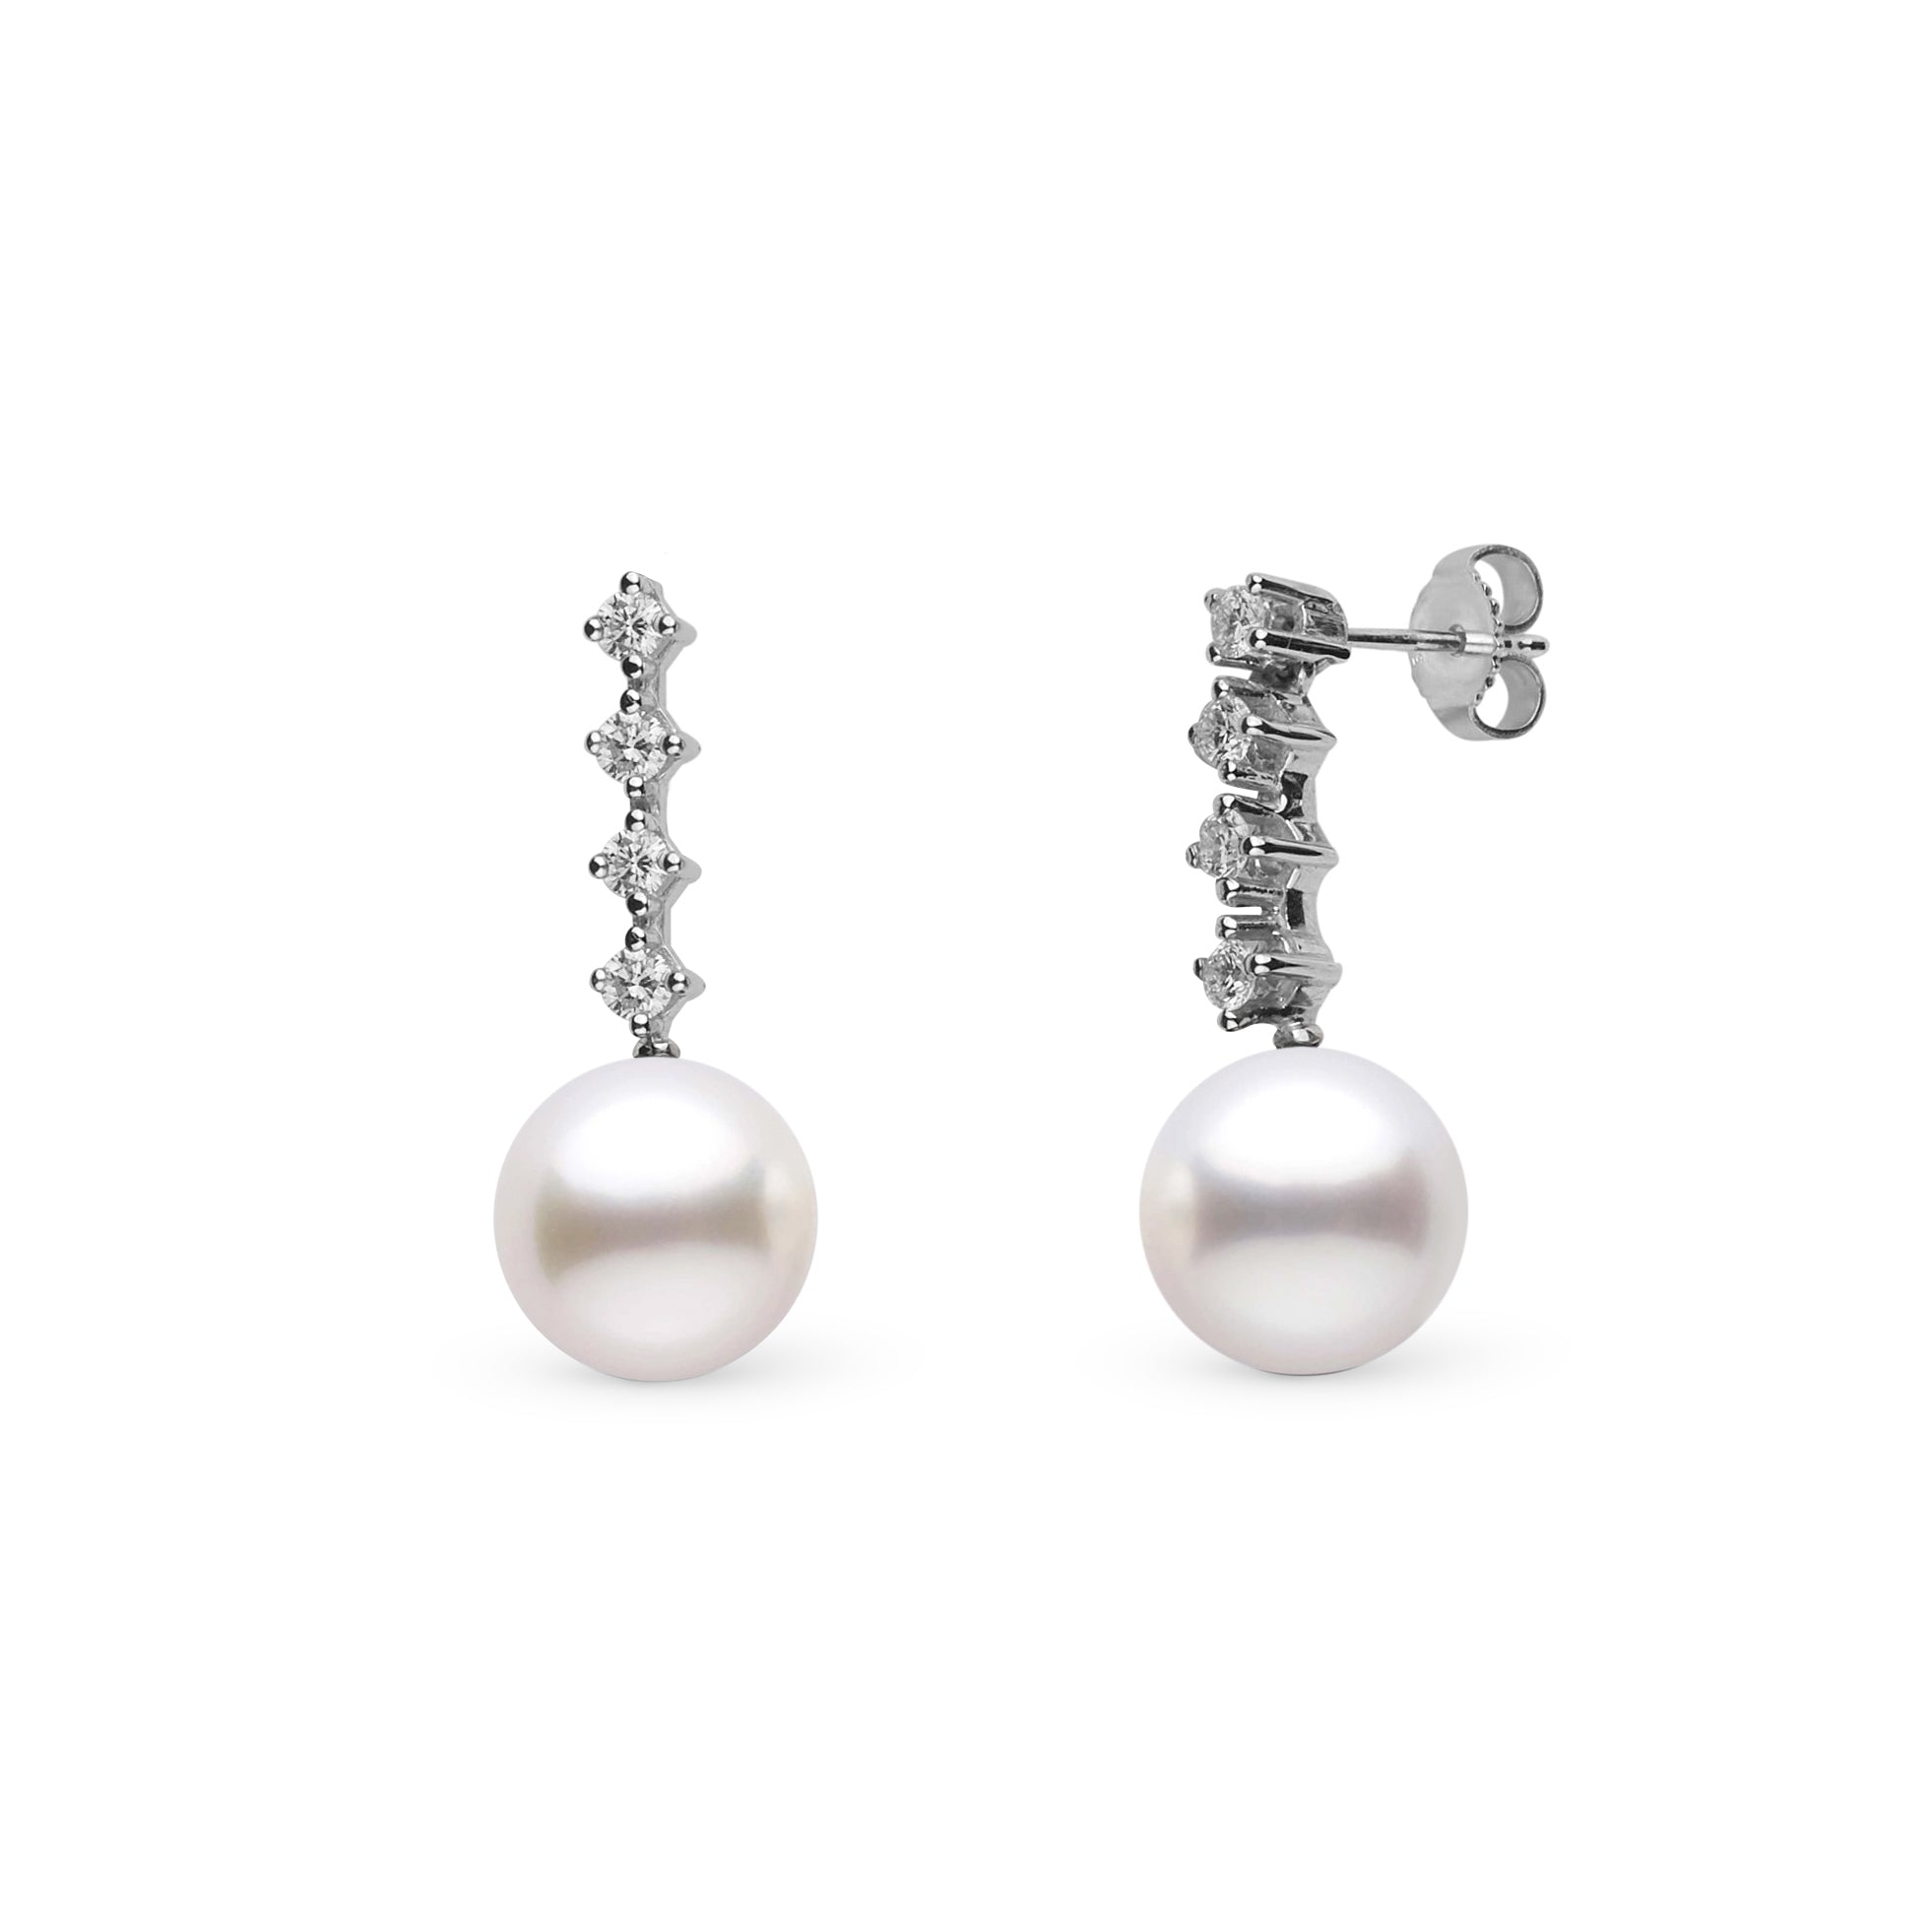 10.0-11.0 mm White South Sea Pearl and Diamond Luminary Earrings